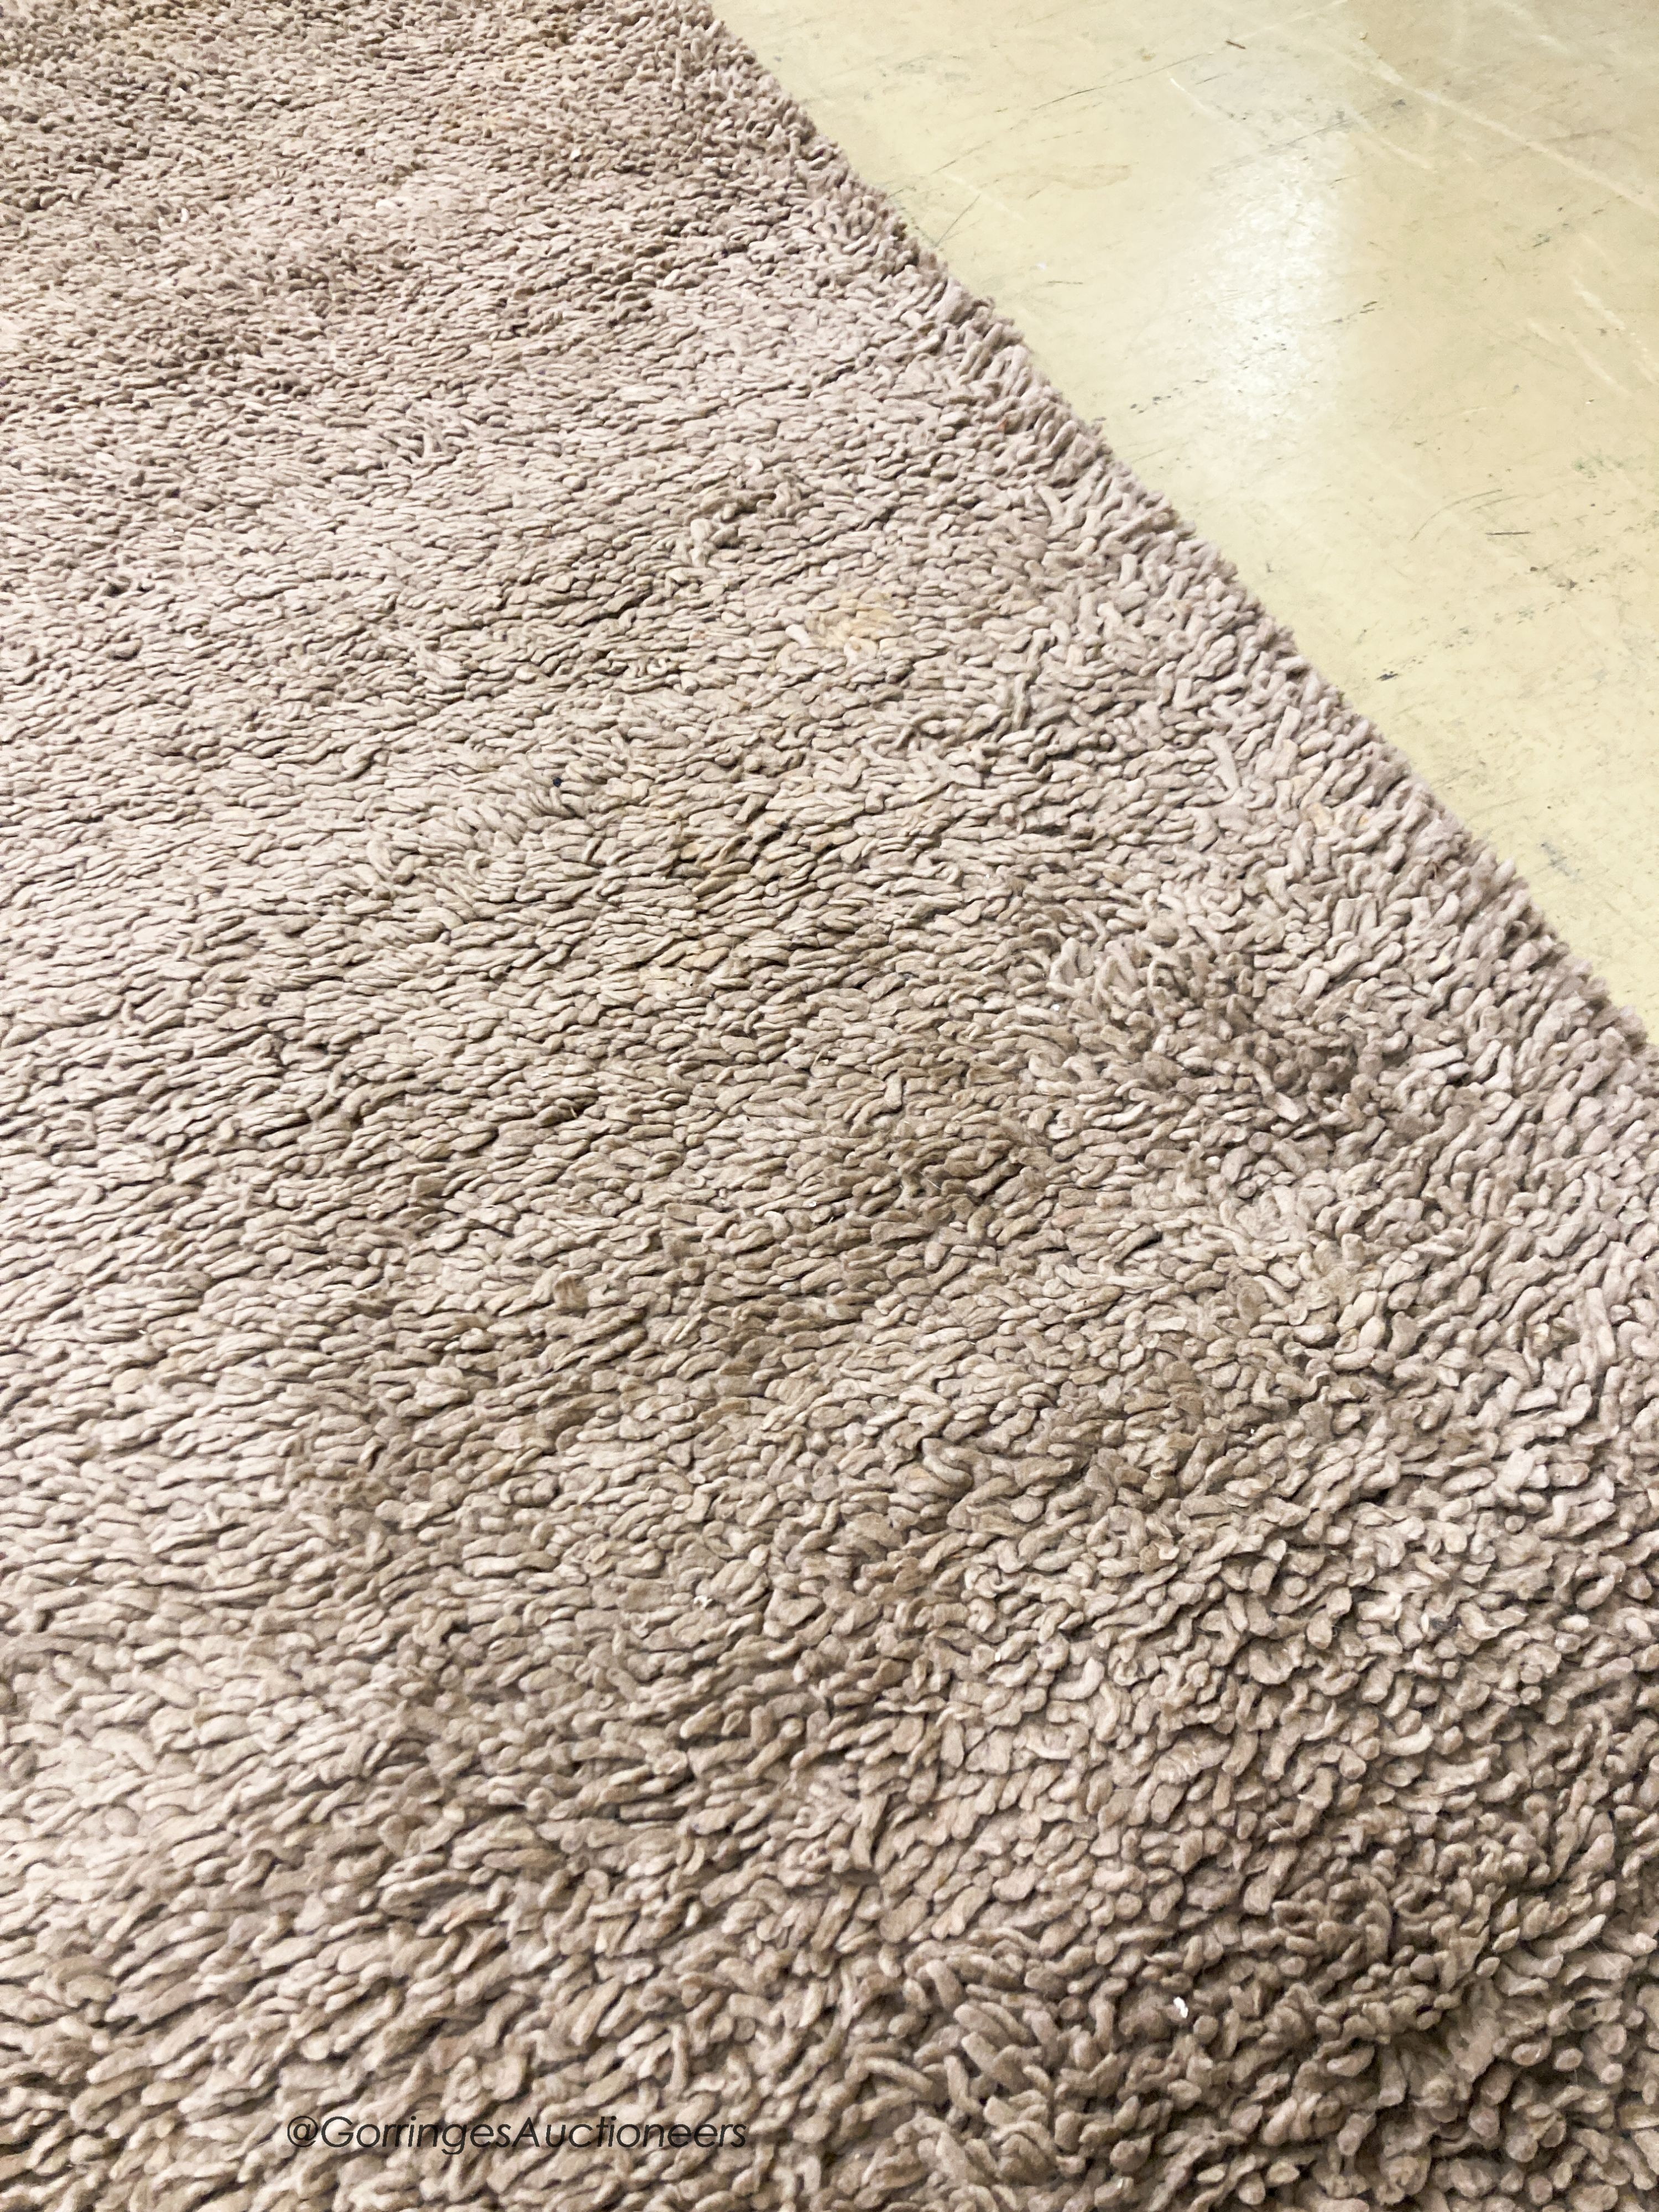 A contemporary brown shag pile carpet, 300 x 200cm